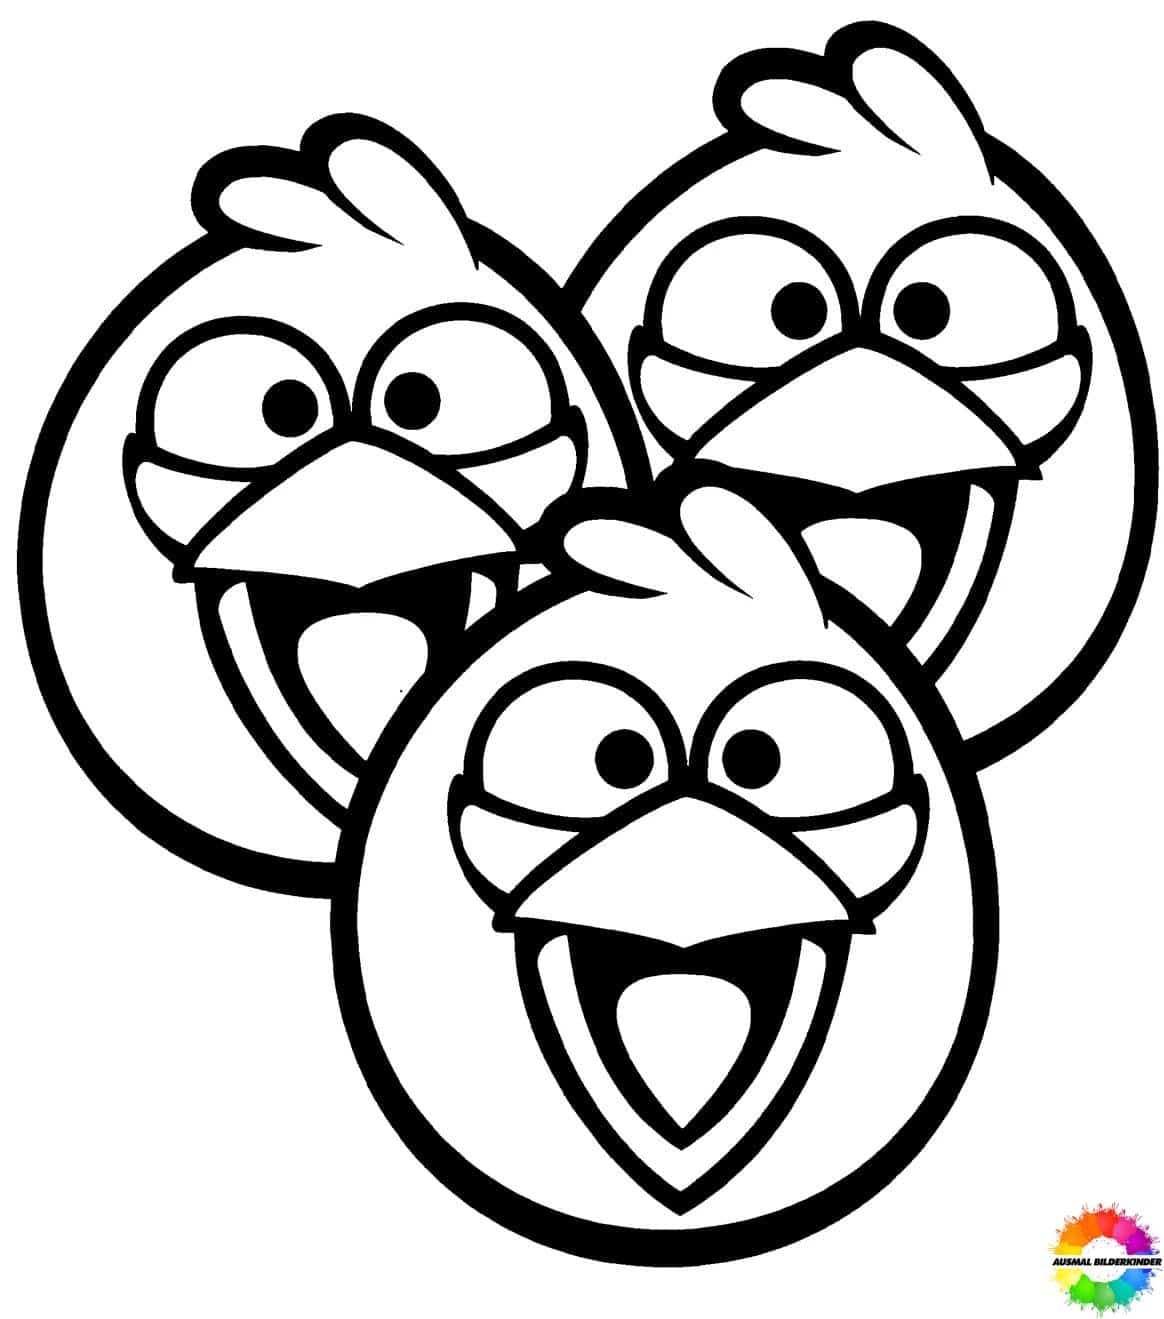 Angry-Birds-Ausmalbilder-ausmalbilderkinder-de-16